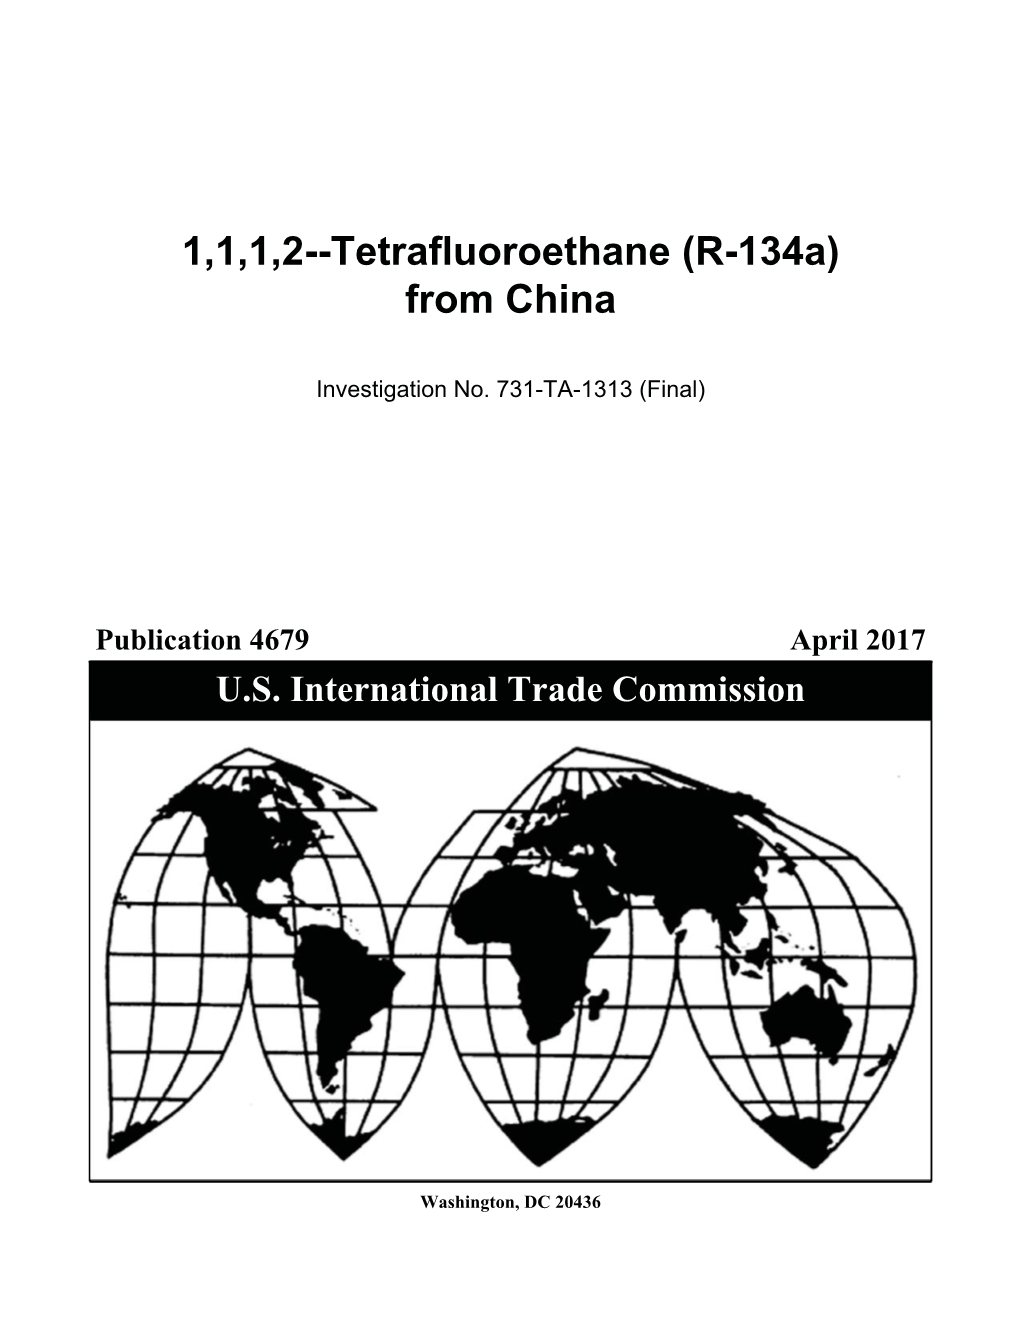 1,1,1,2--Tetrafluoroethane (R-134A) from China